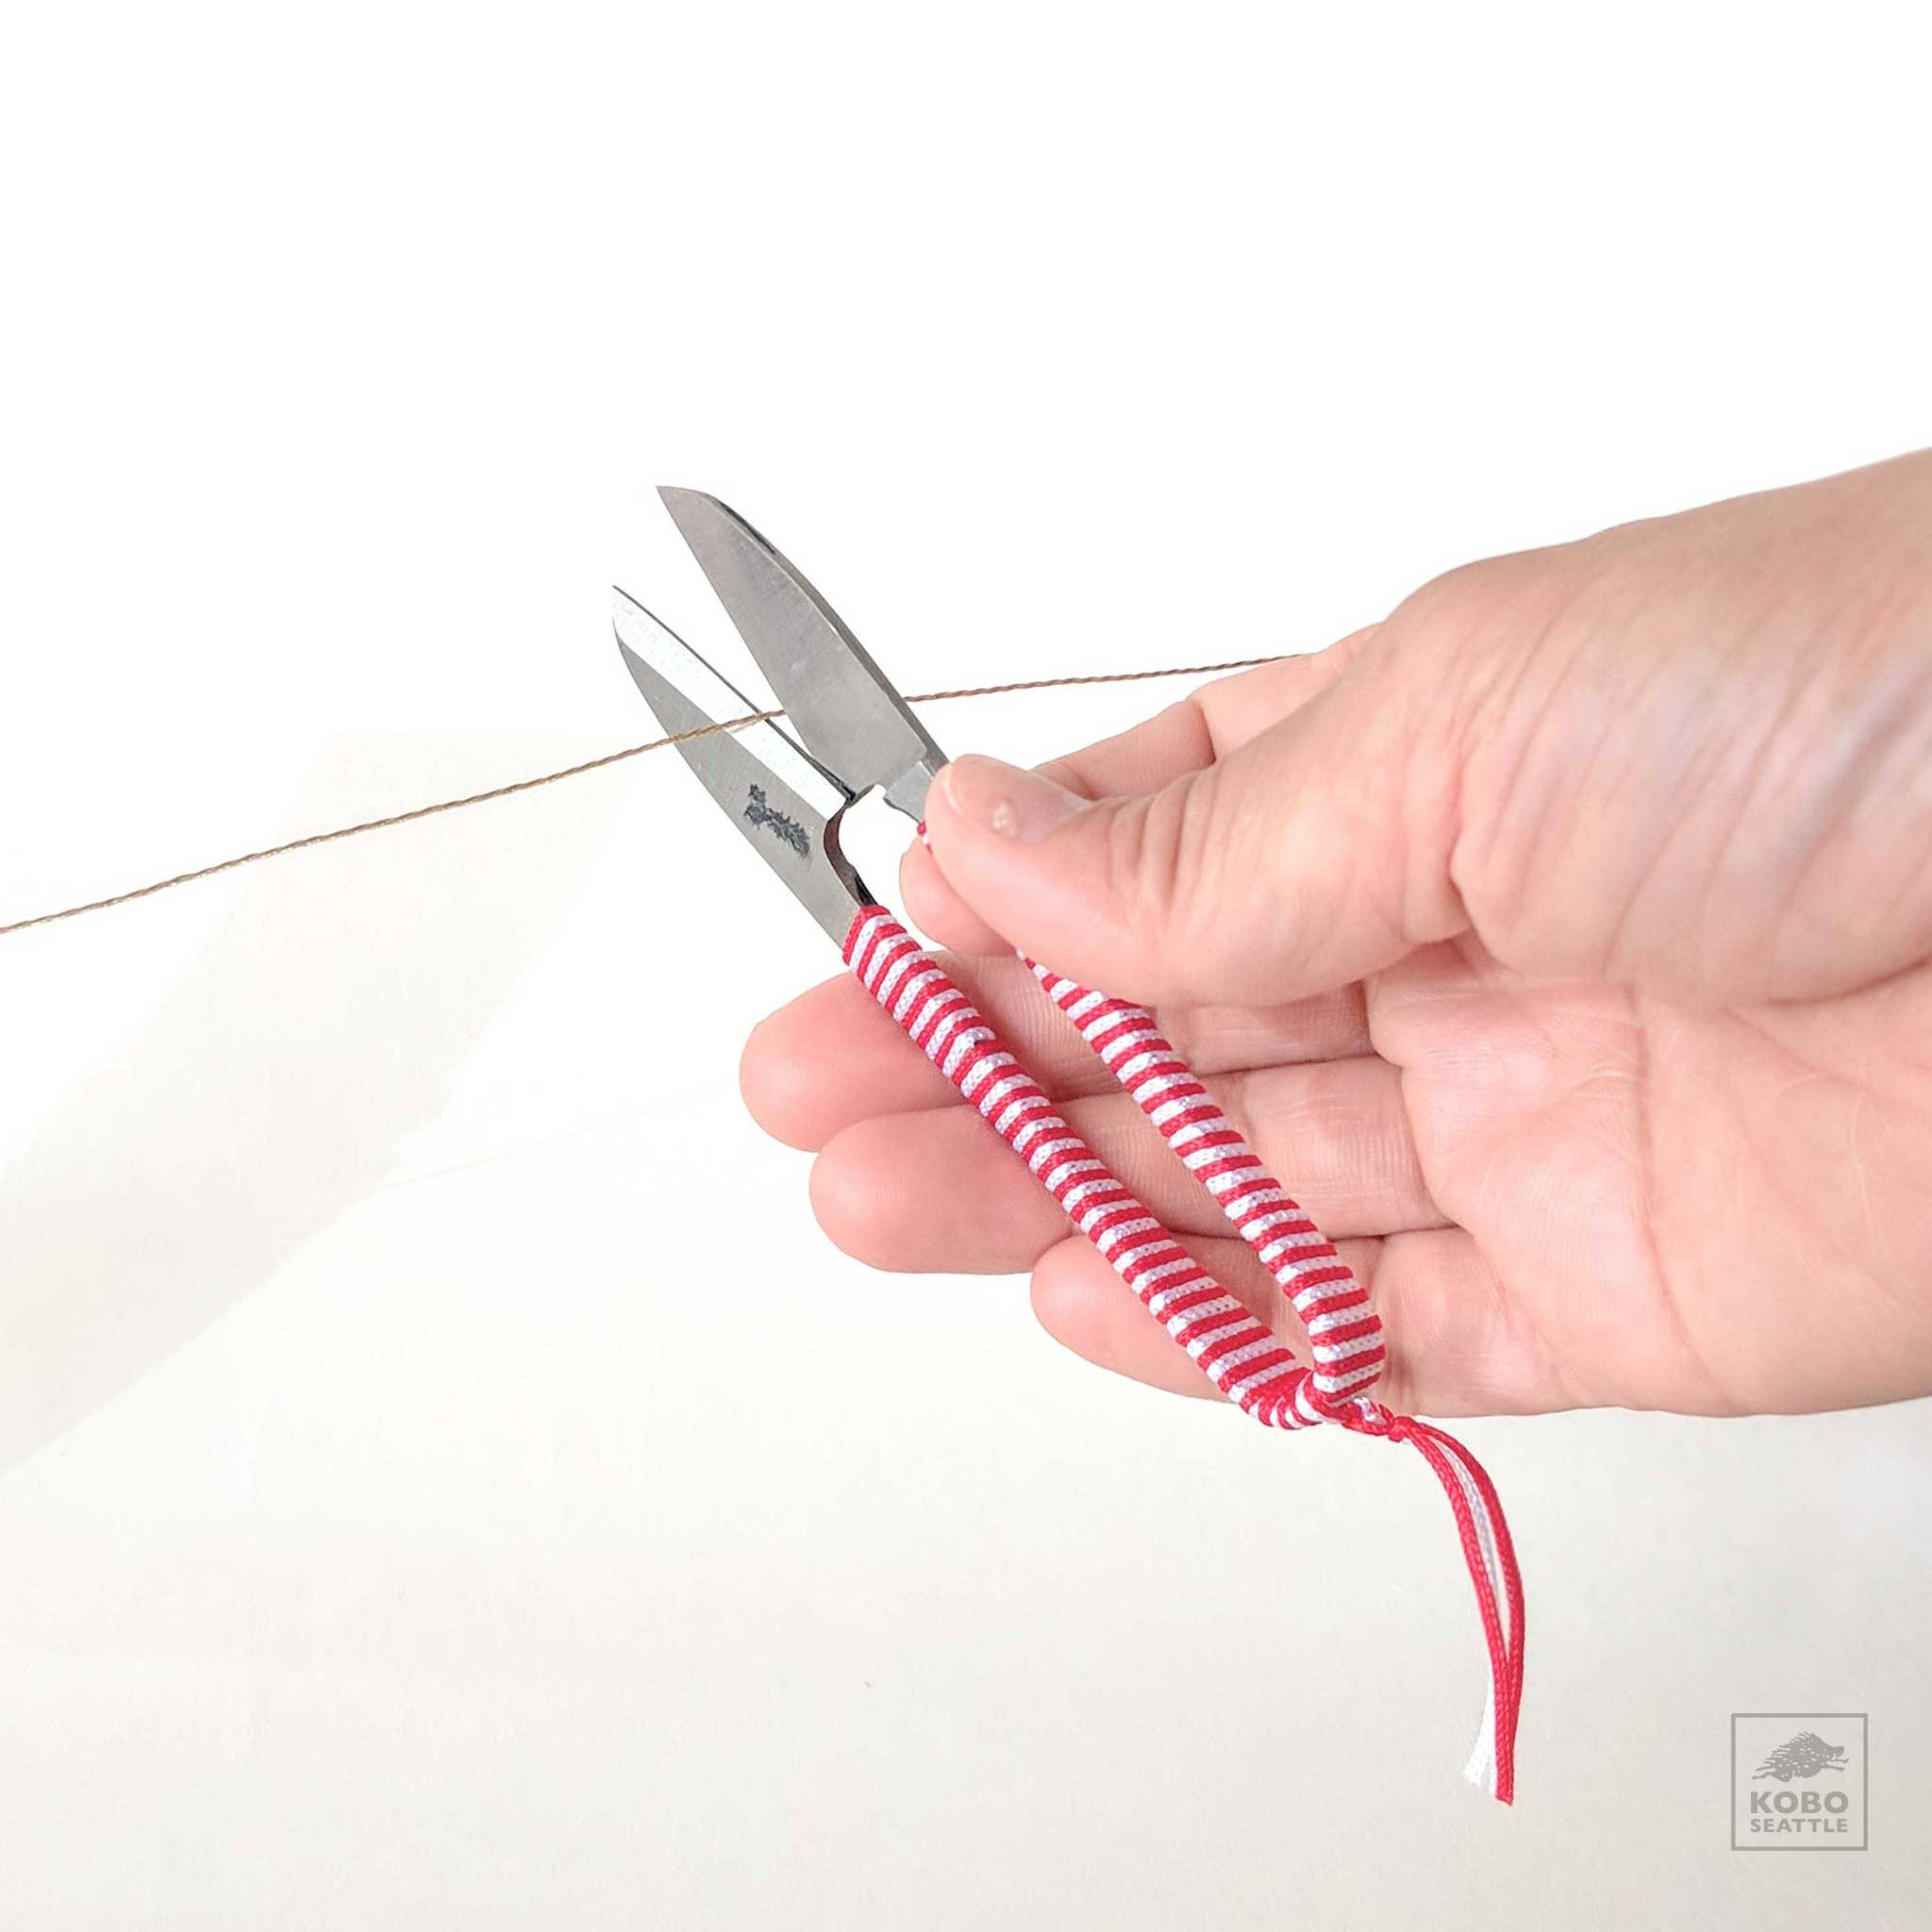 Thread Scissors - KoboSeattle